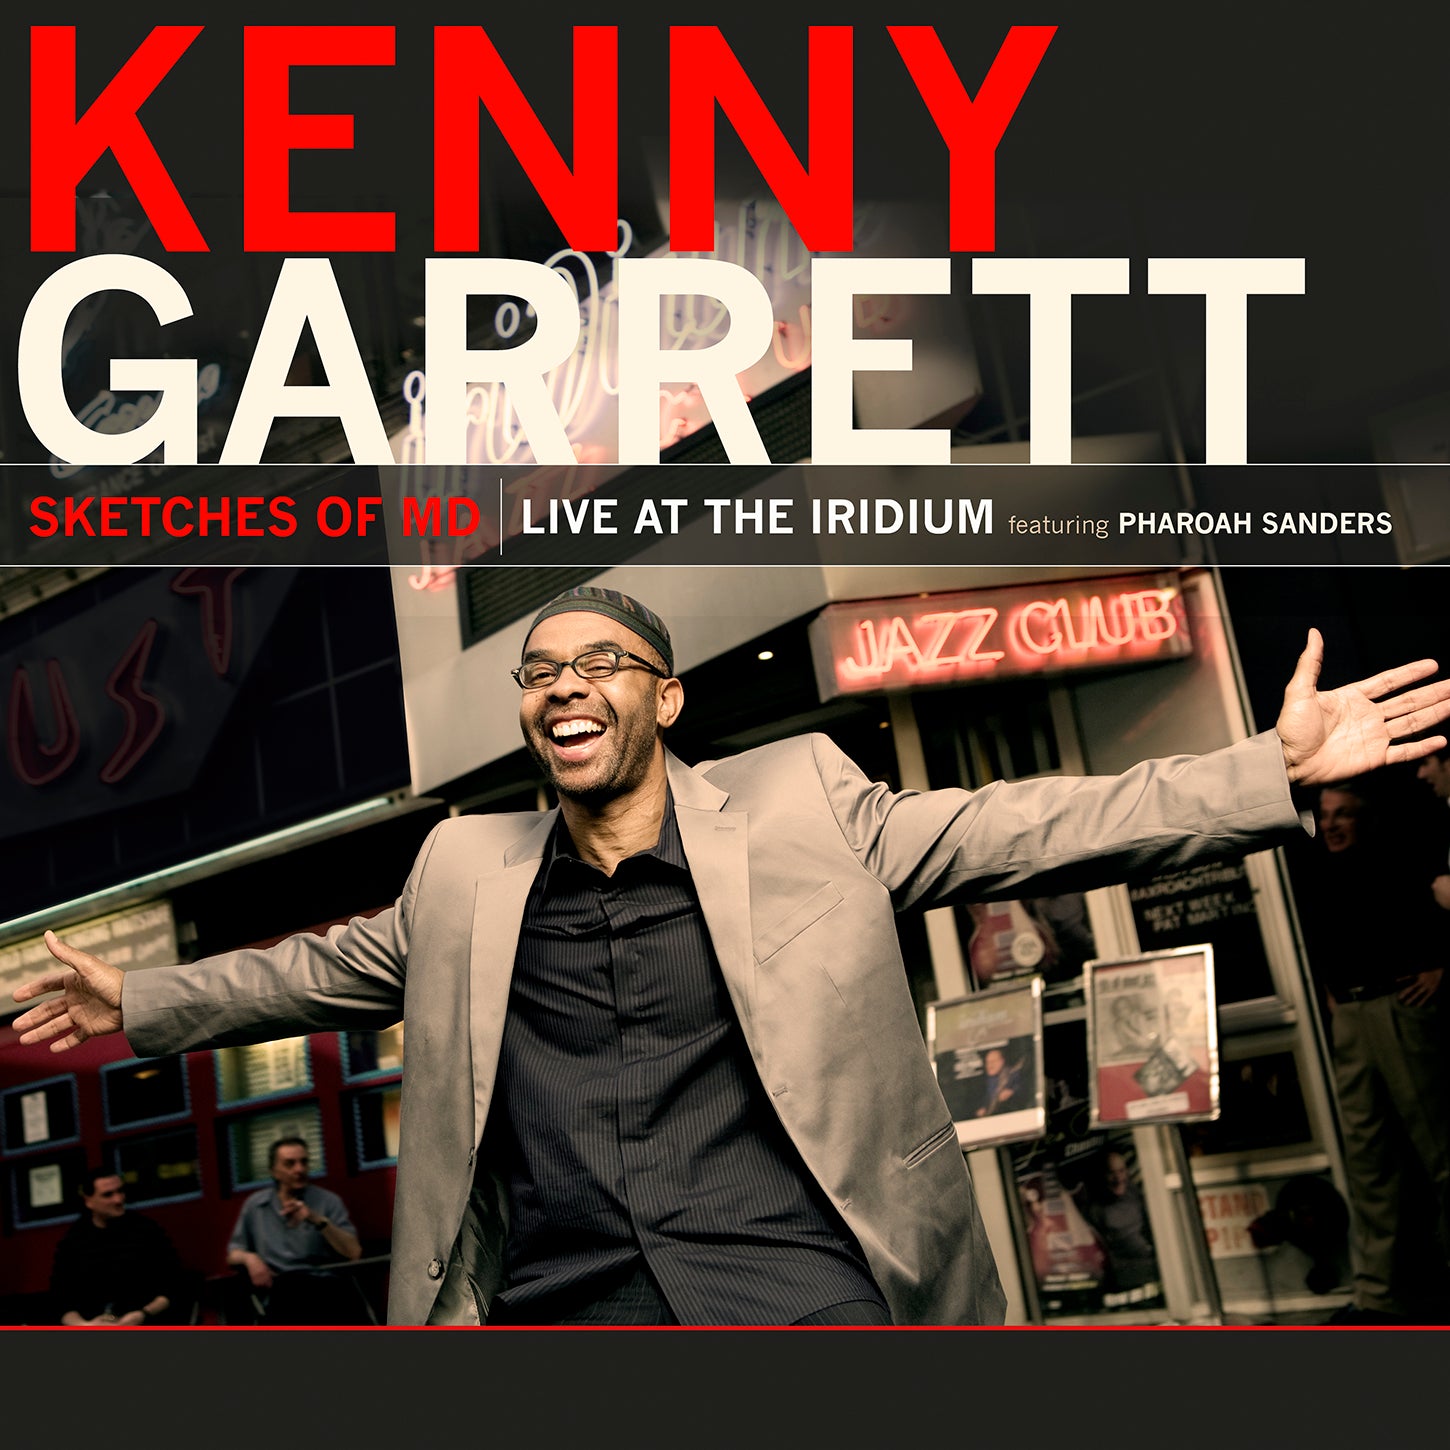 Kenny Garrett: Sketches of MD - Live at the Iridium ft. Pharoah Sanders [Vinyl]